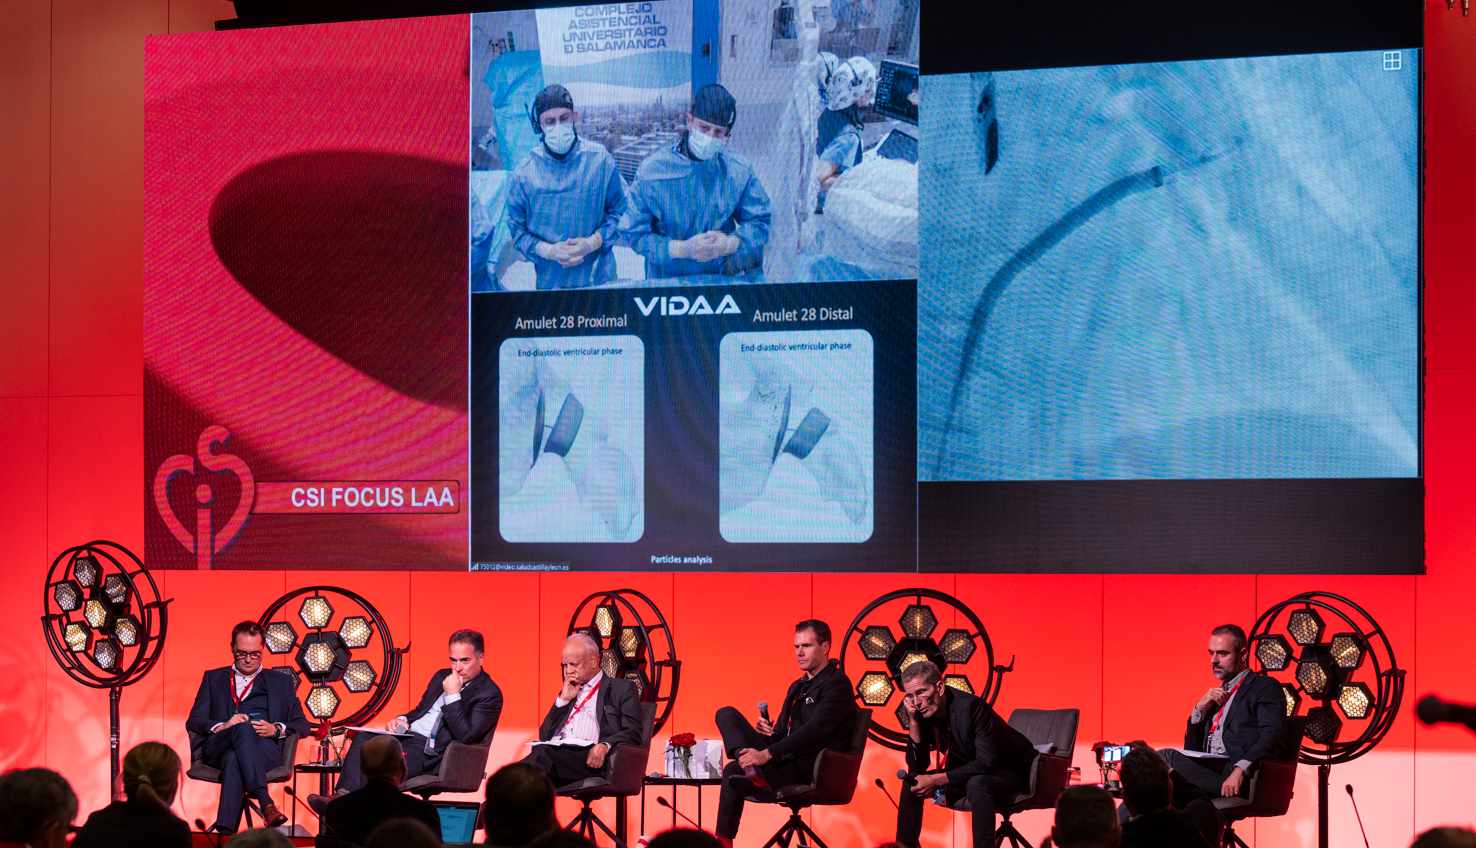 VIDAA: Innovació pionera en cirurgia cardíaca al congrés CSI LAA focus de Frankfurt utilitzant un cor virtual